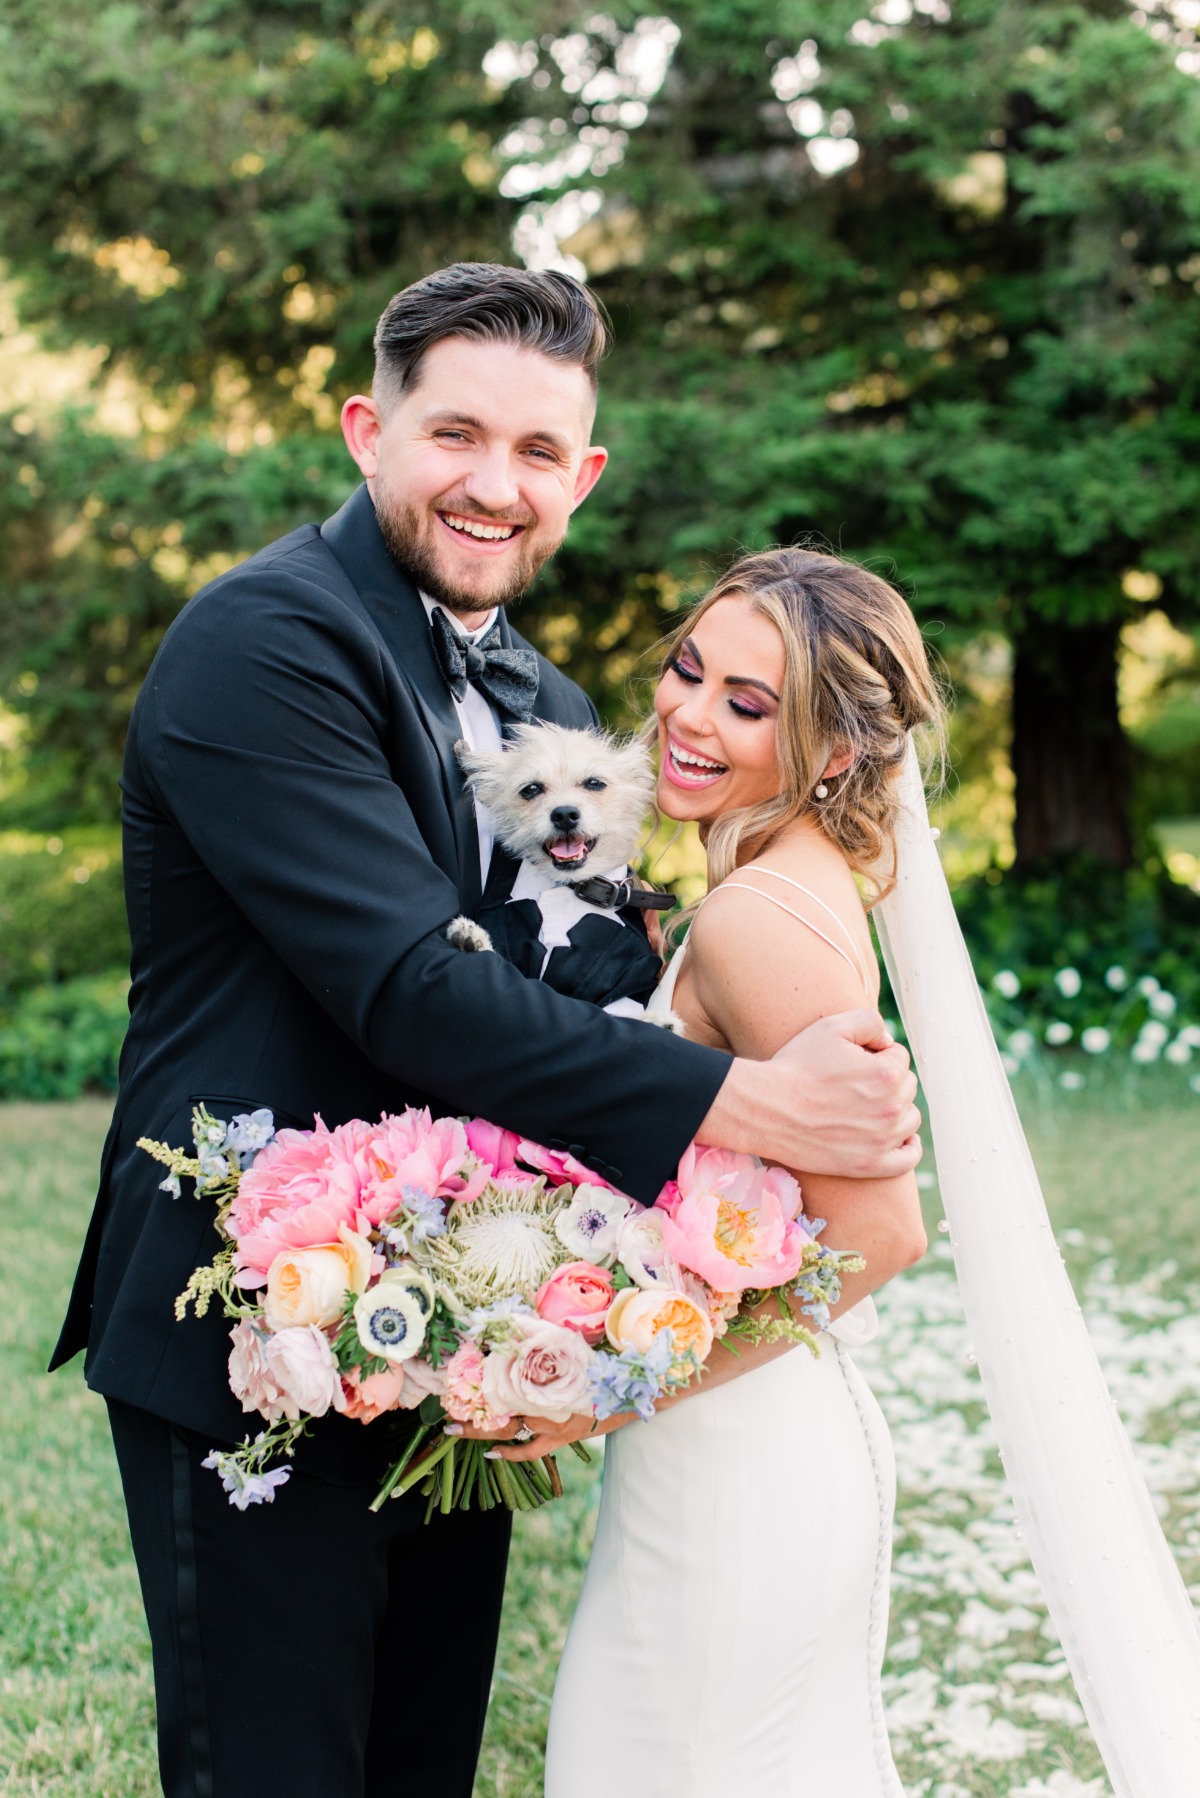 Playful wedding photos with puppy